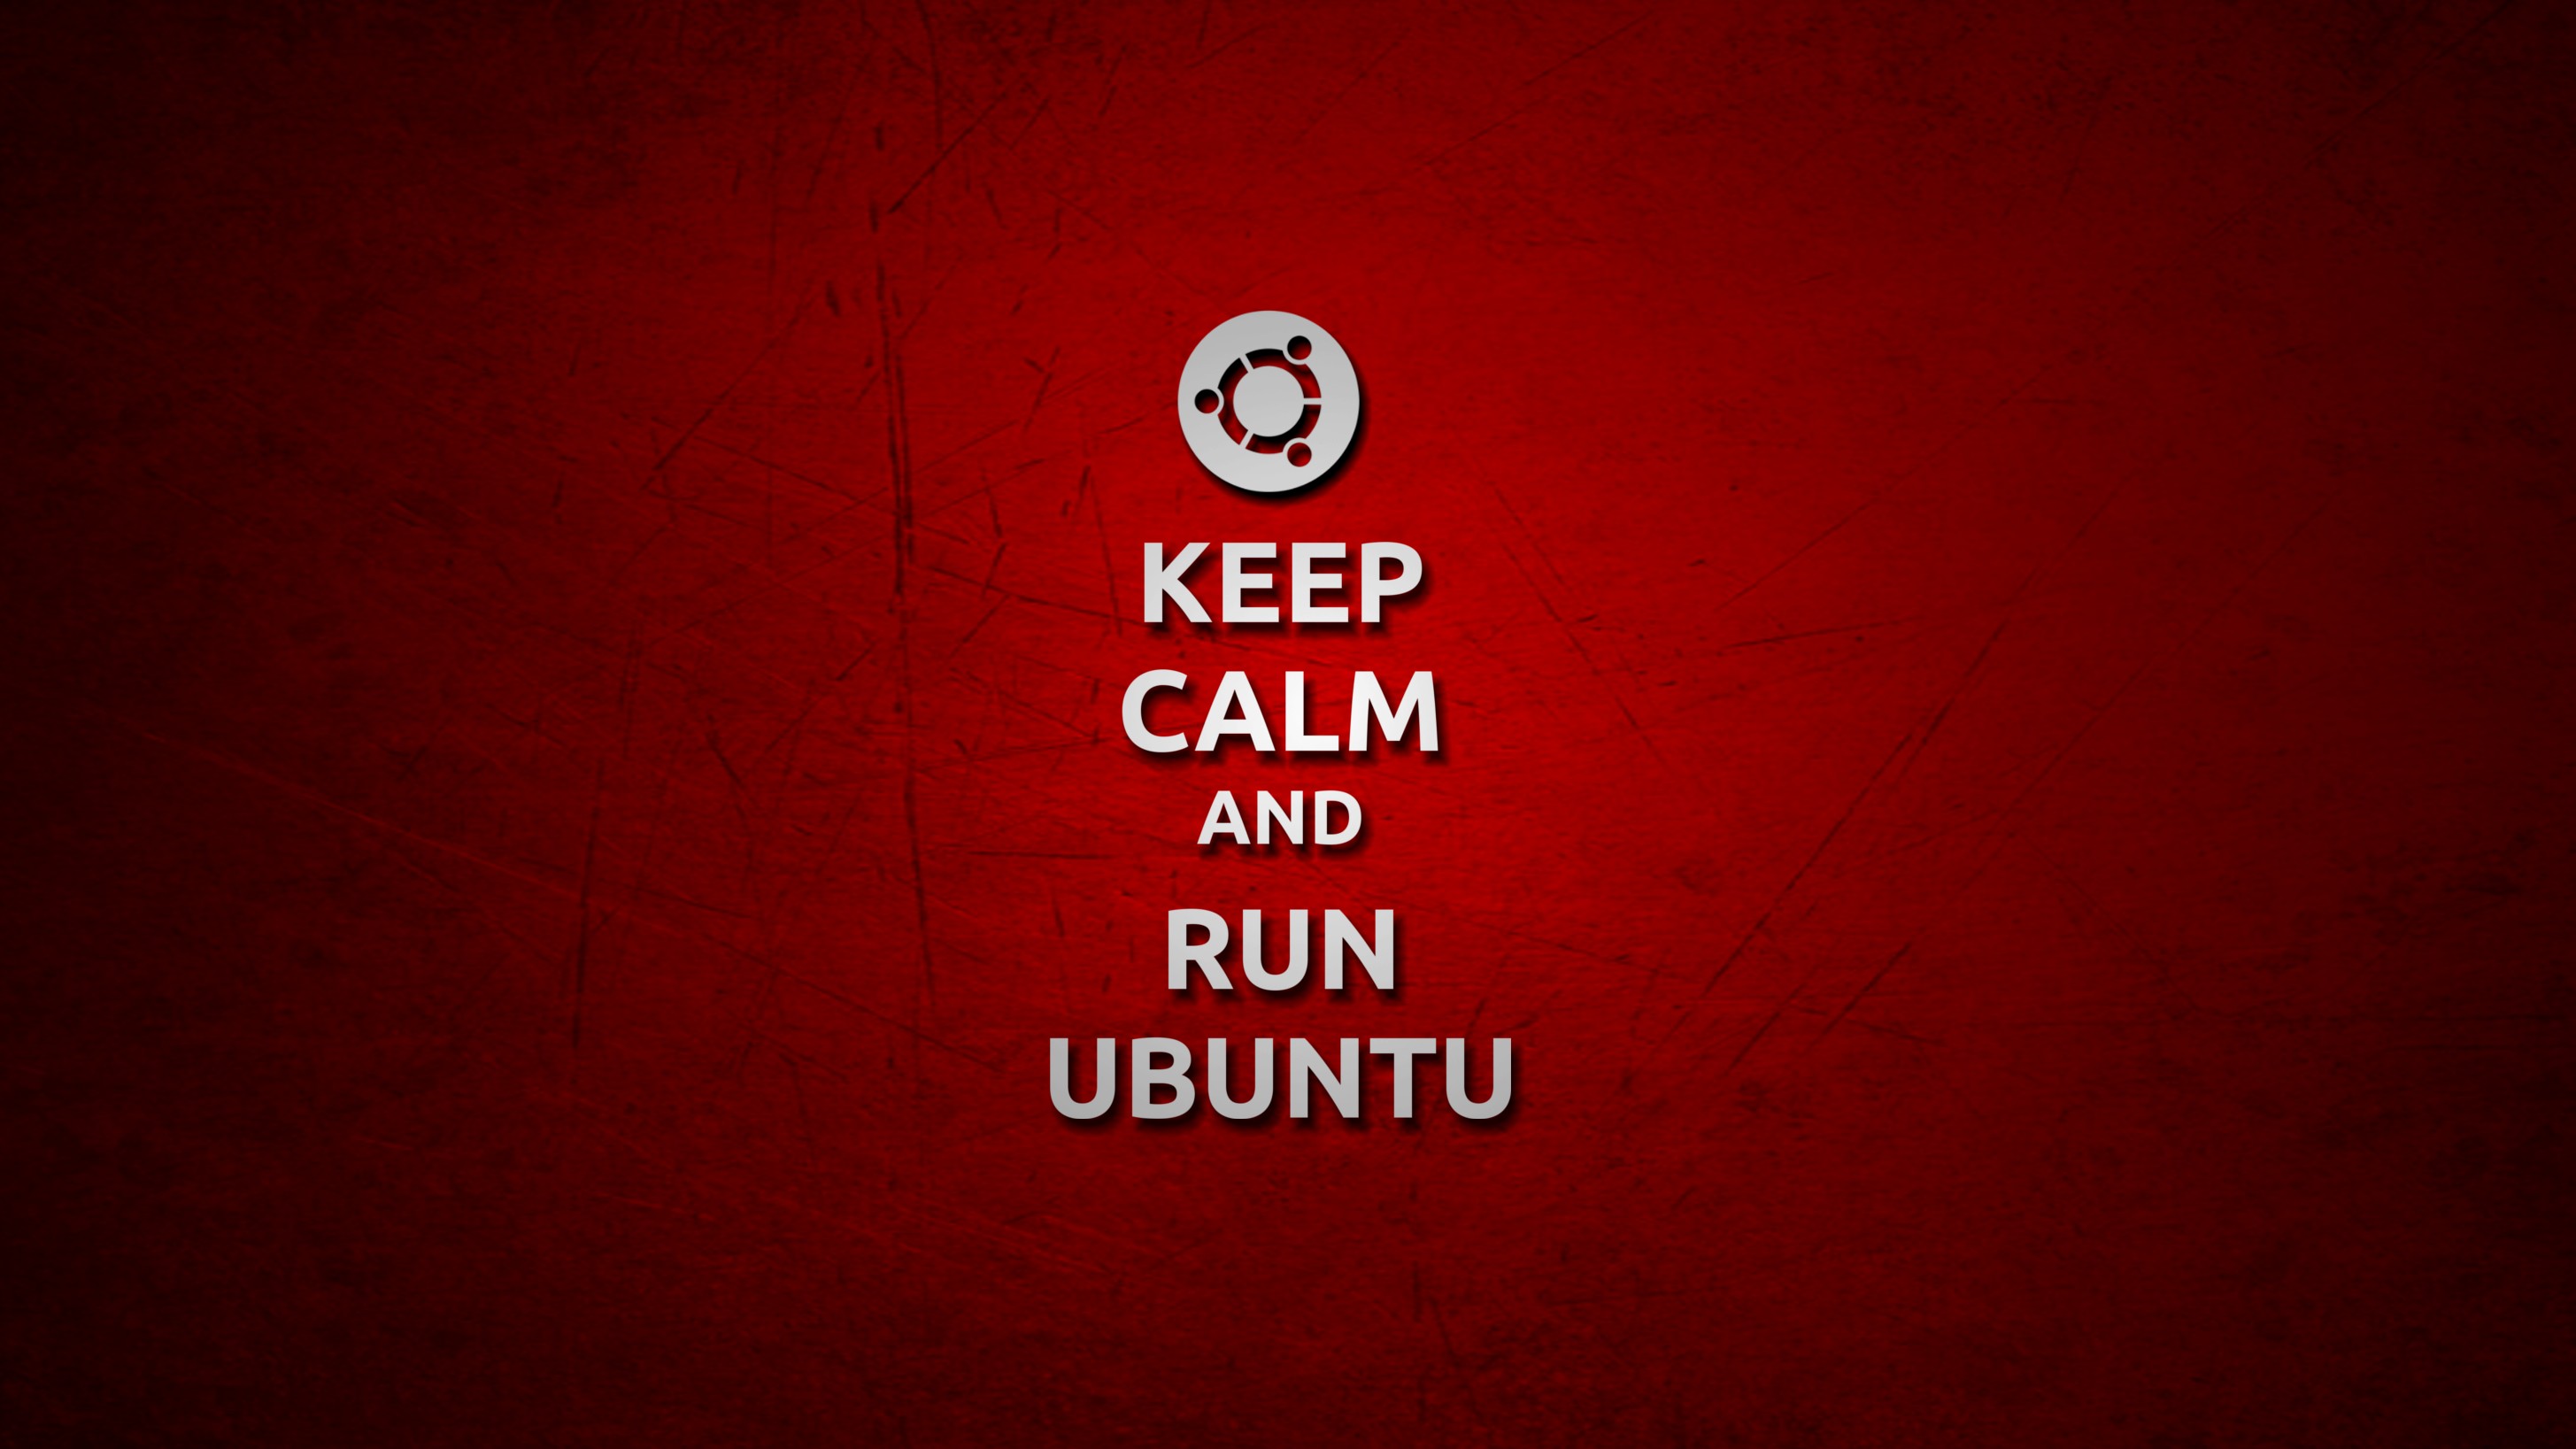 Linux, Red Hat, Ubuntu Wallpaper